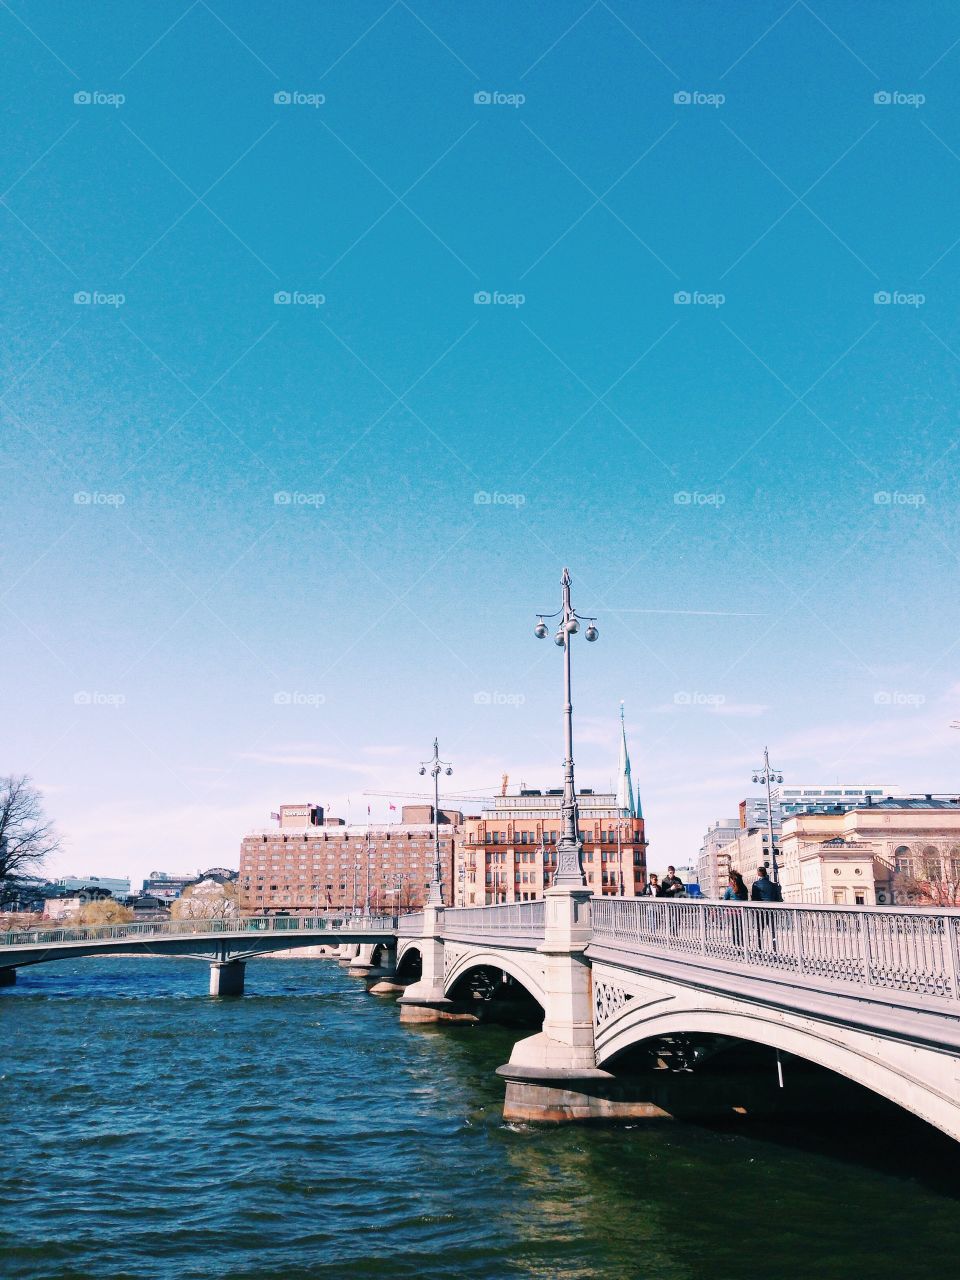 bridges over stockholm water